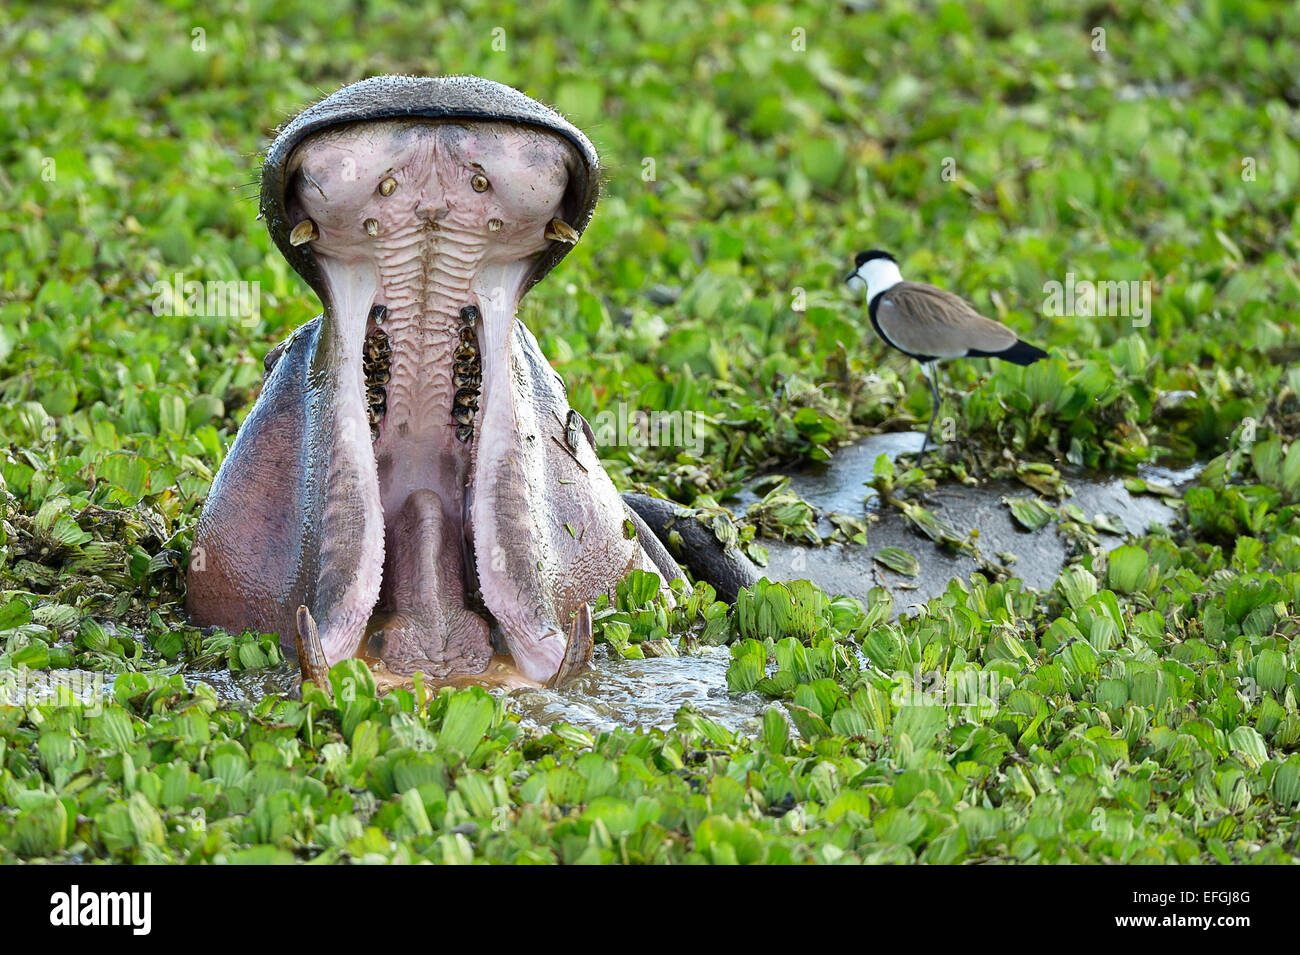 Hippopotamus (Hippopotamus amphibicus), female in stagnant waters with aquatic plants, close-up, yawning Stock Photo